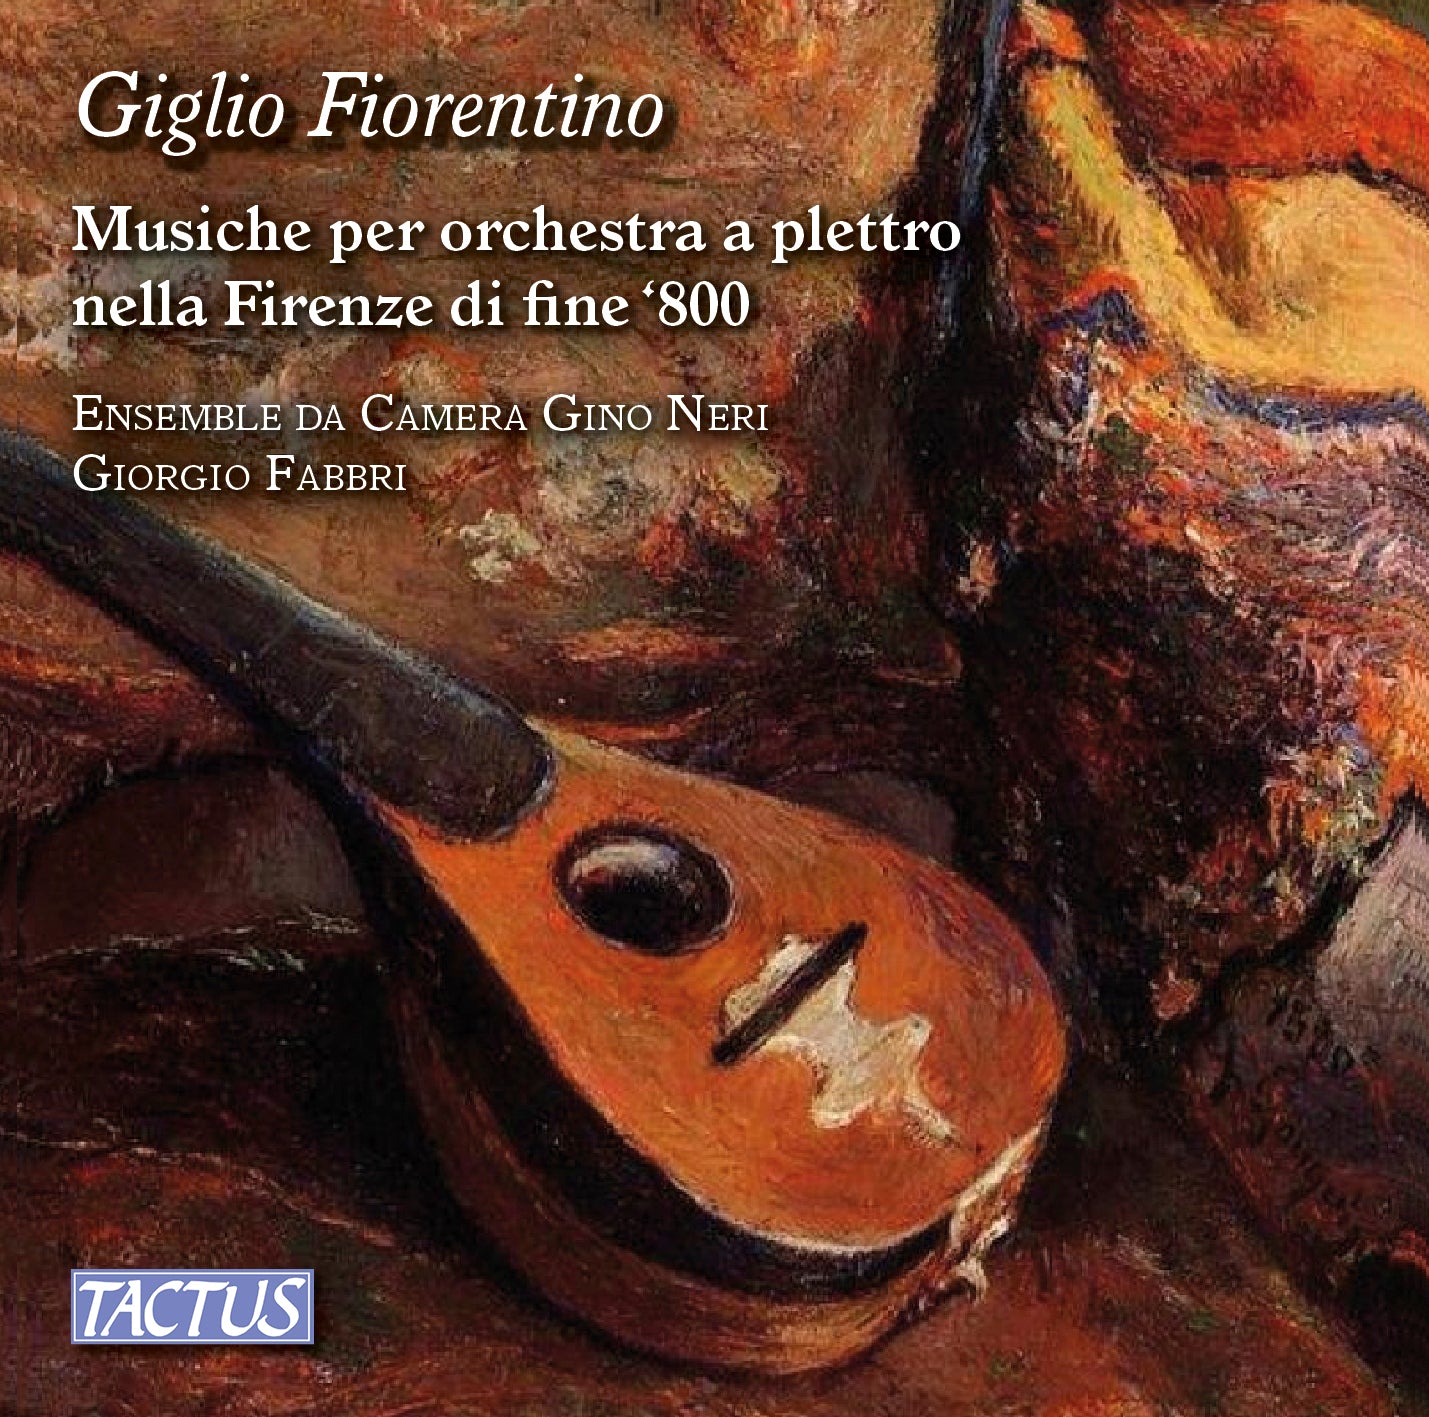 Giglio fiorentino / Gino Neri Chamber Ensemble